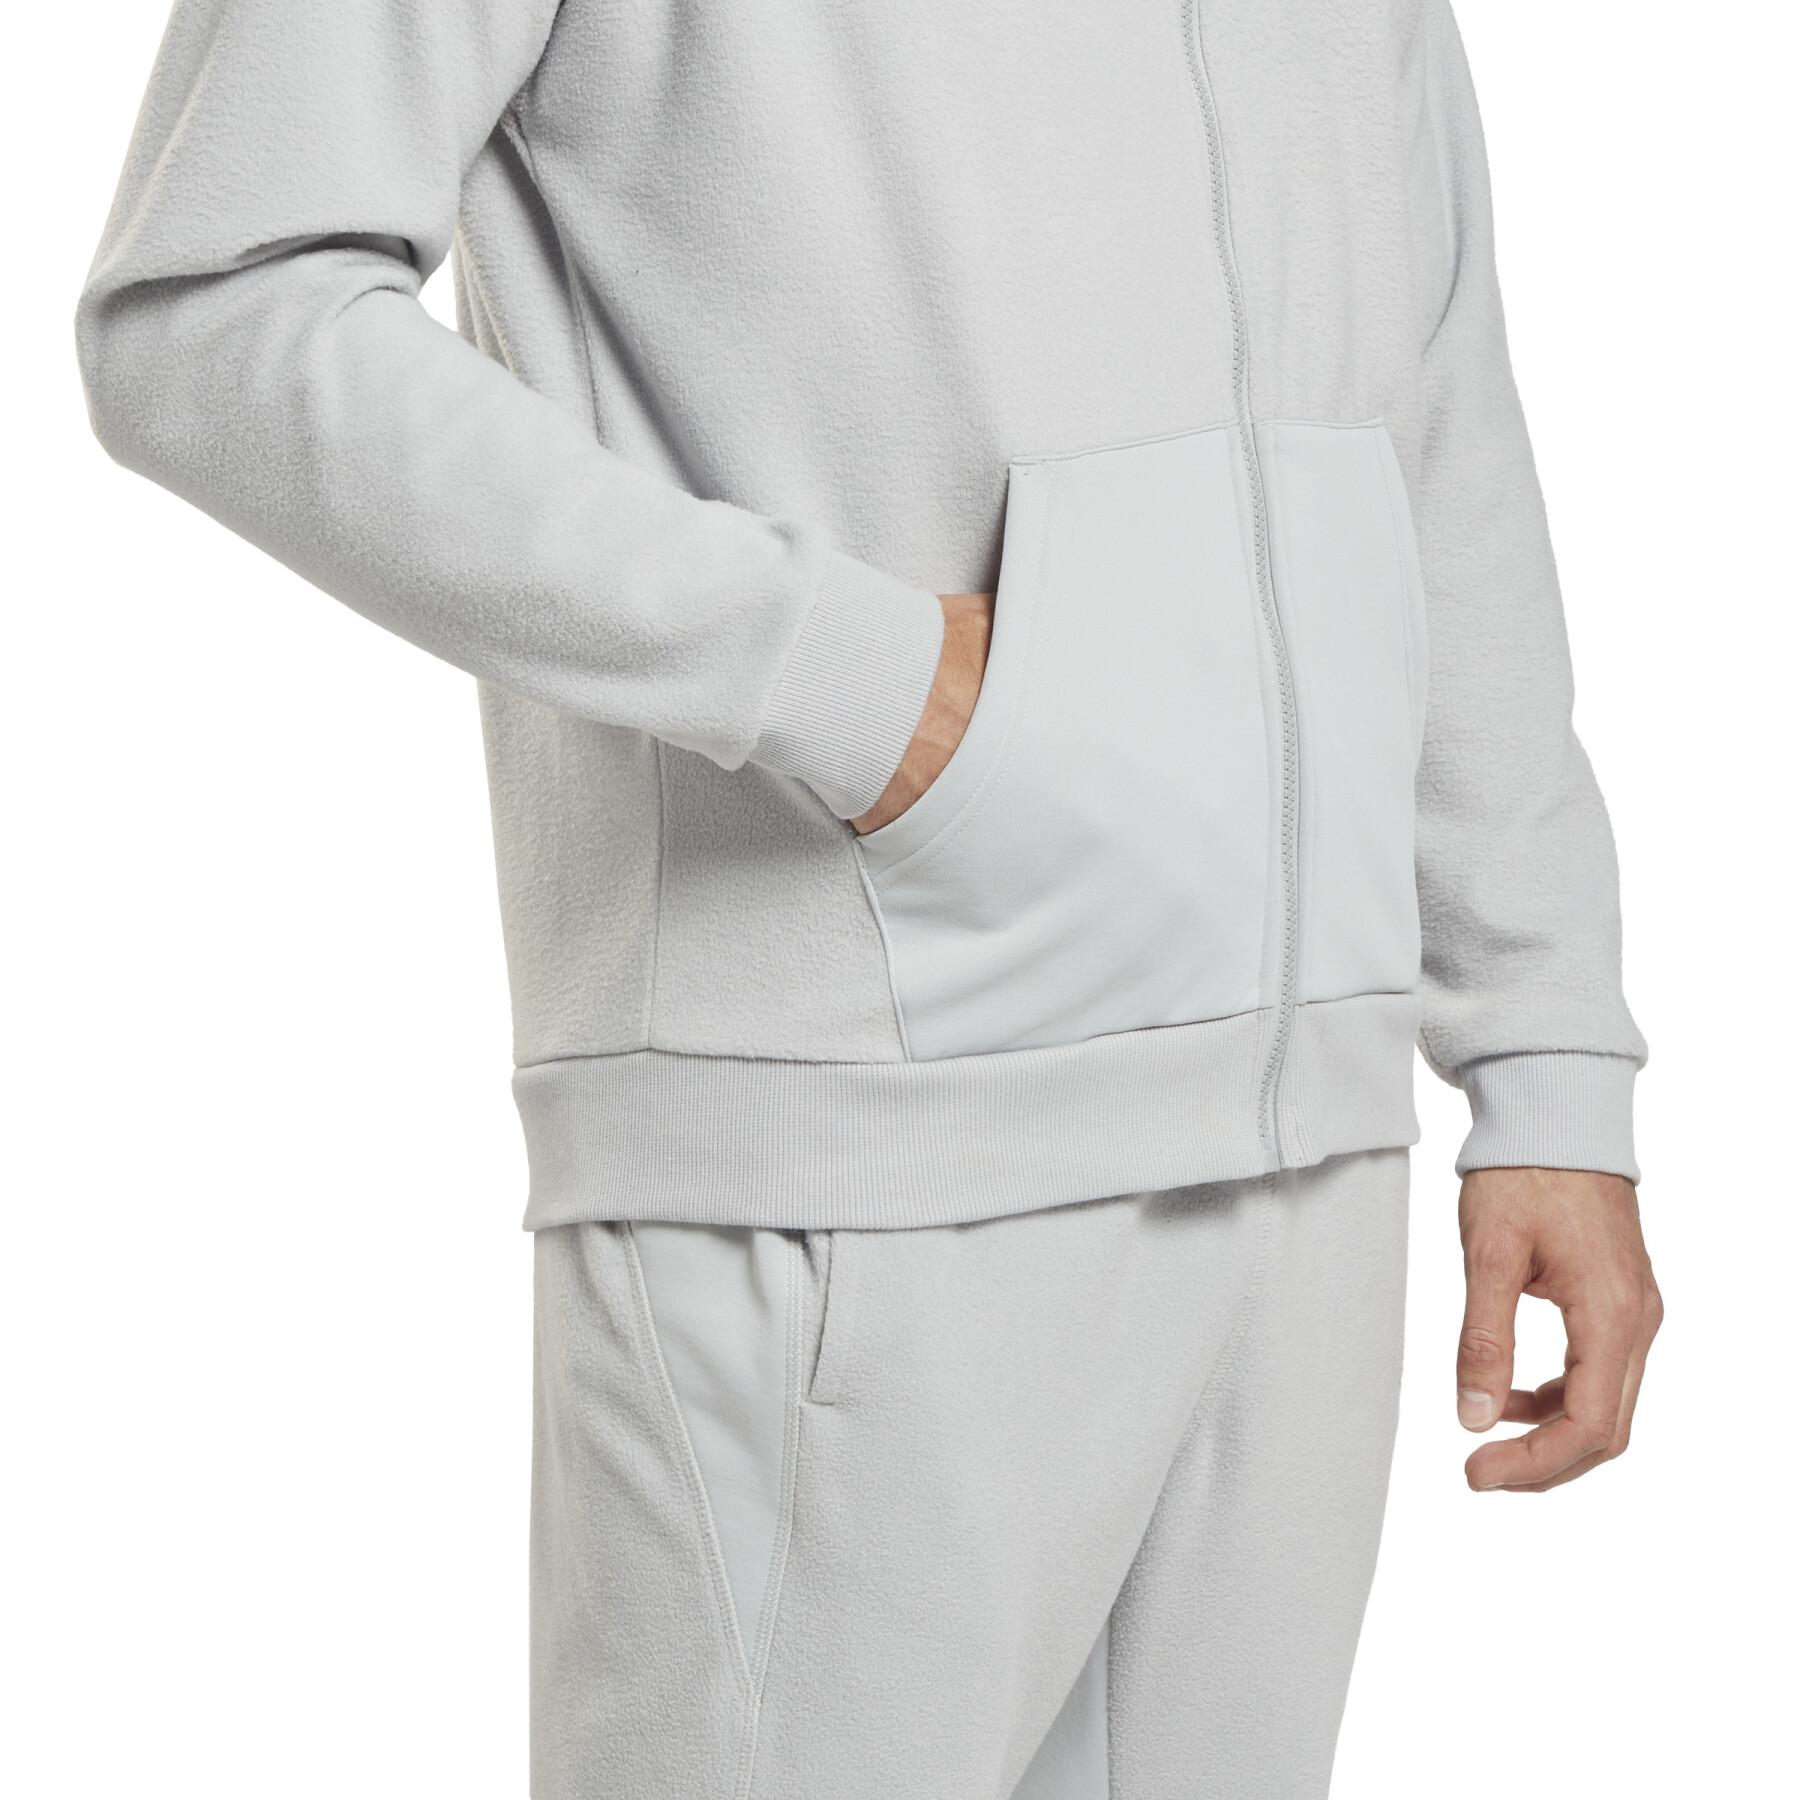 Kapuzen-Sweatshirt mit Reißverschluss Reebok Ready Thermowarm